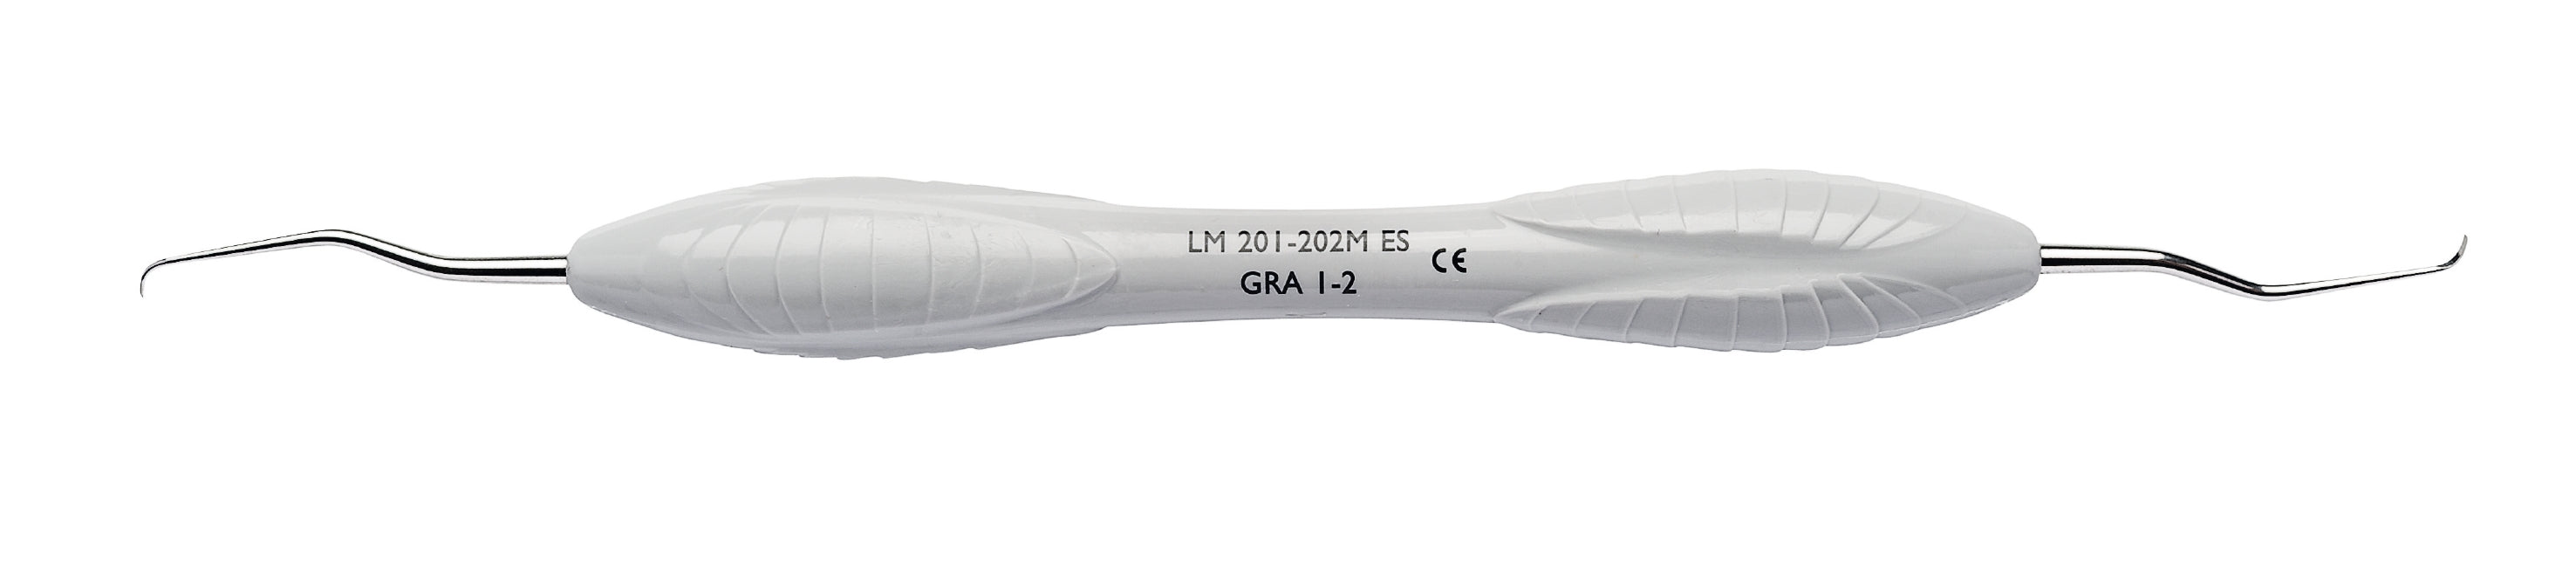 LM 201-202MES Mini Gracey 1/2